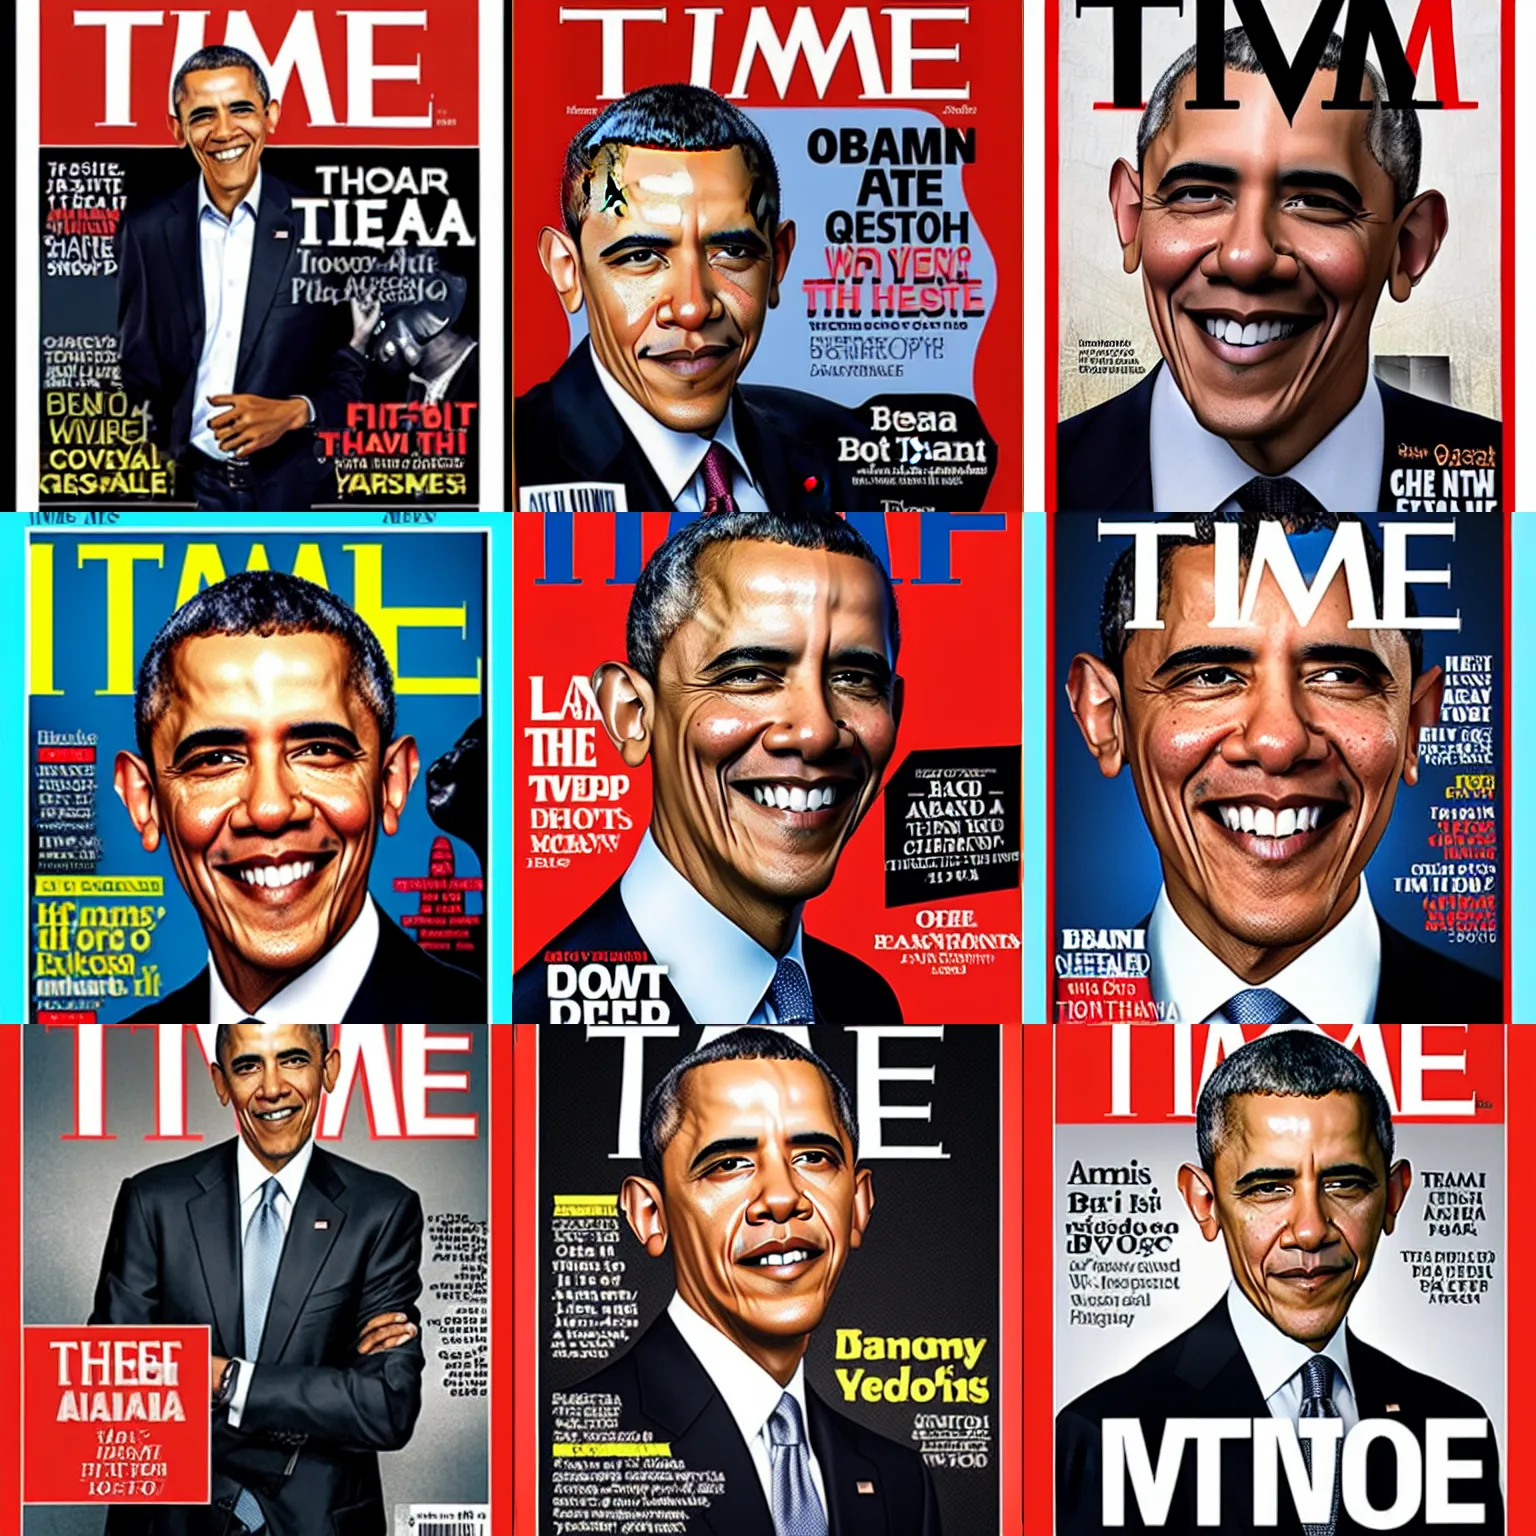 Prompt: barack obama time magazine cover